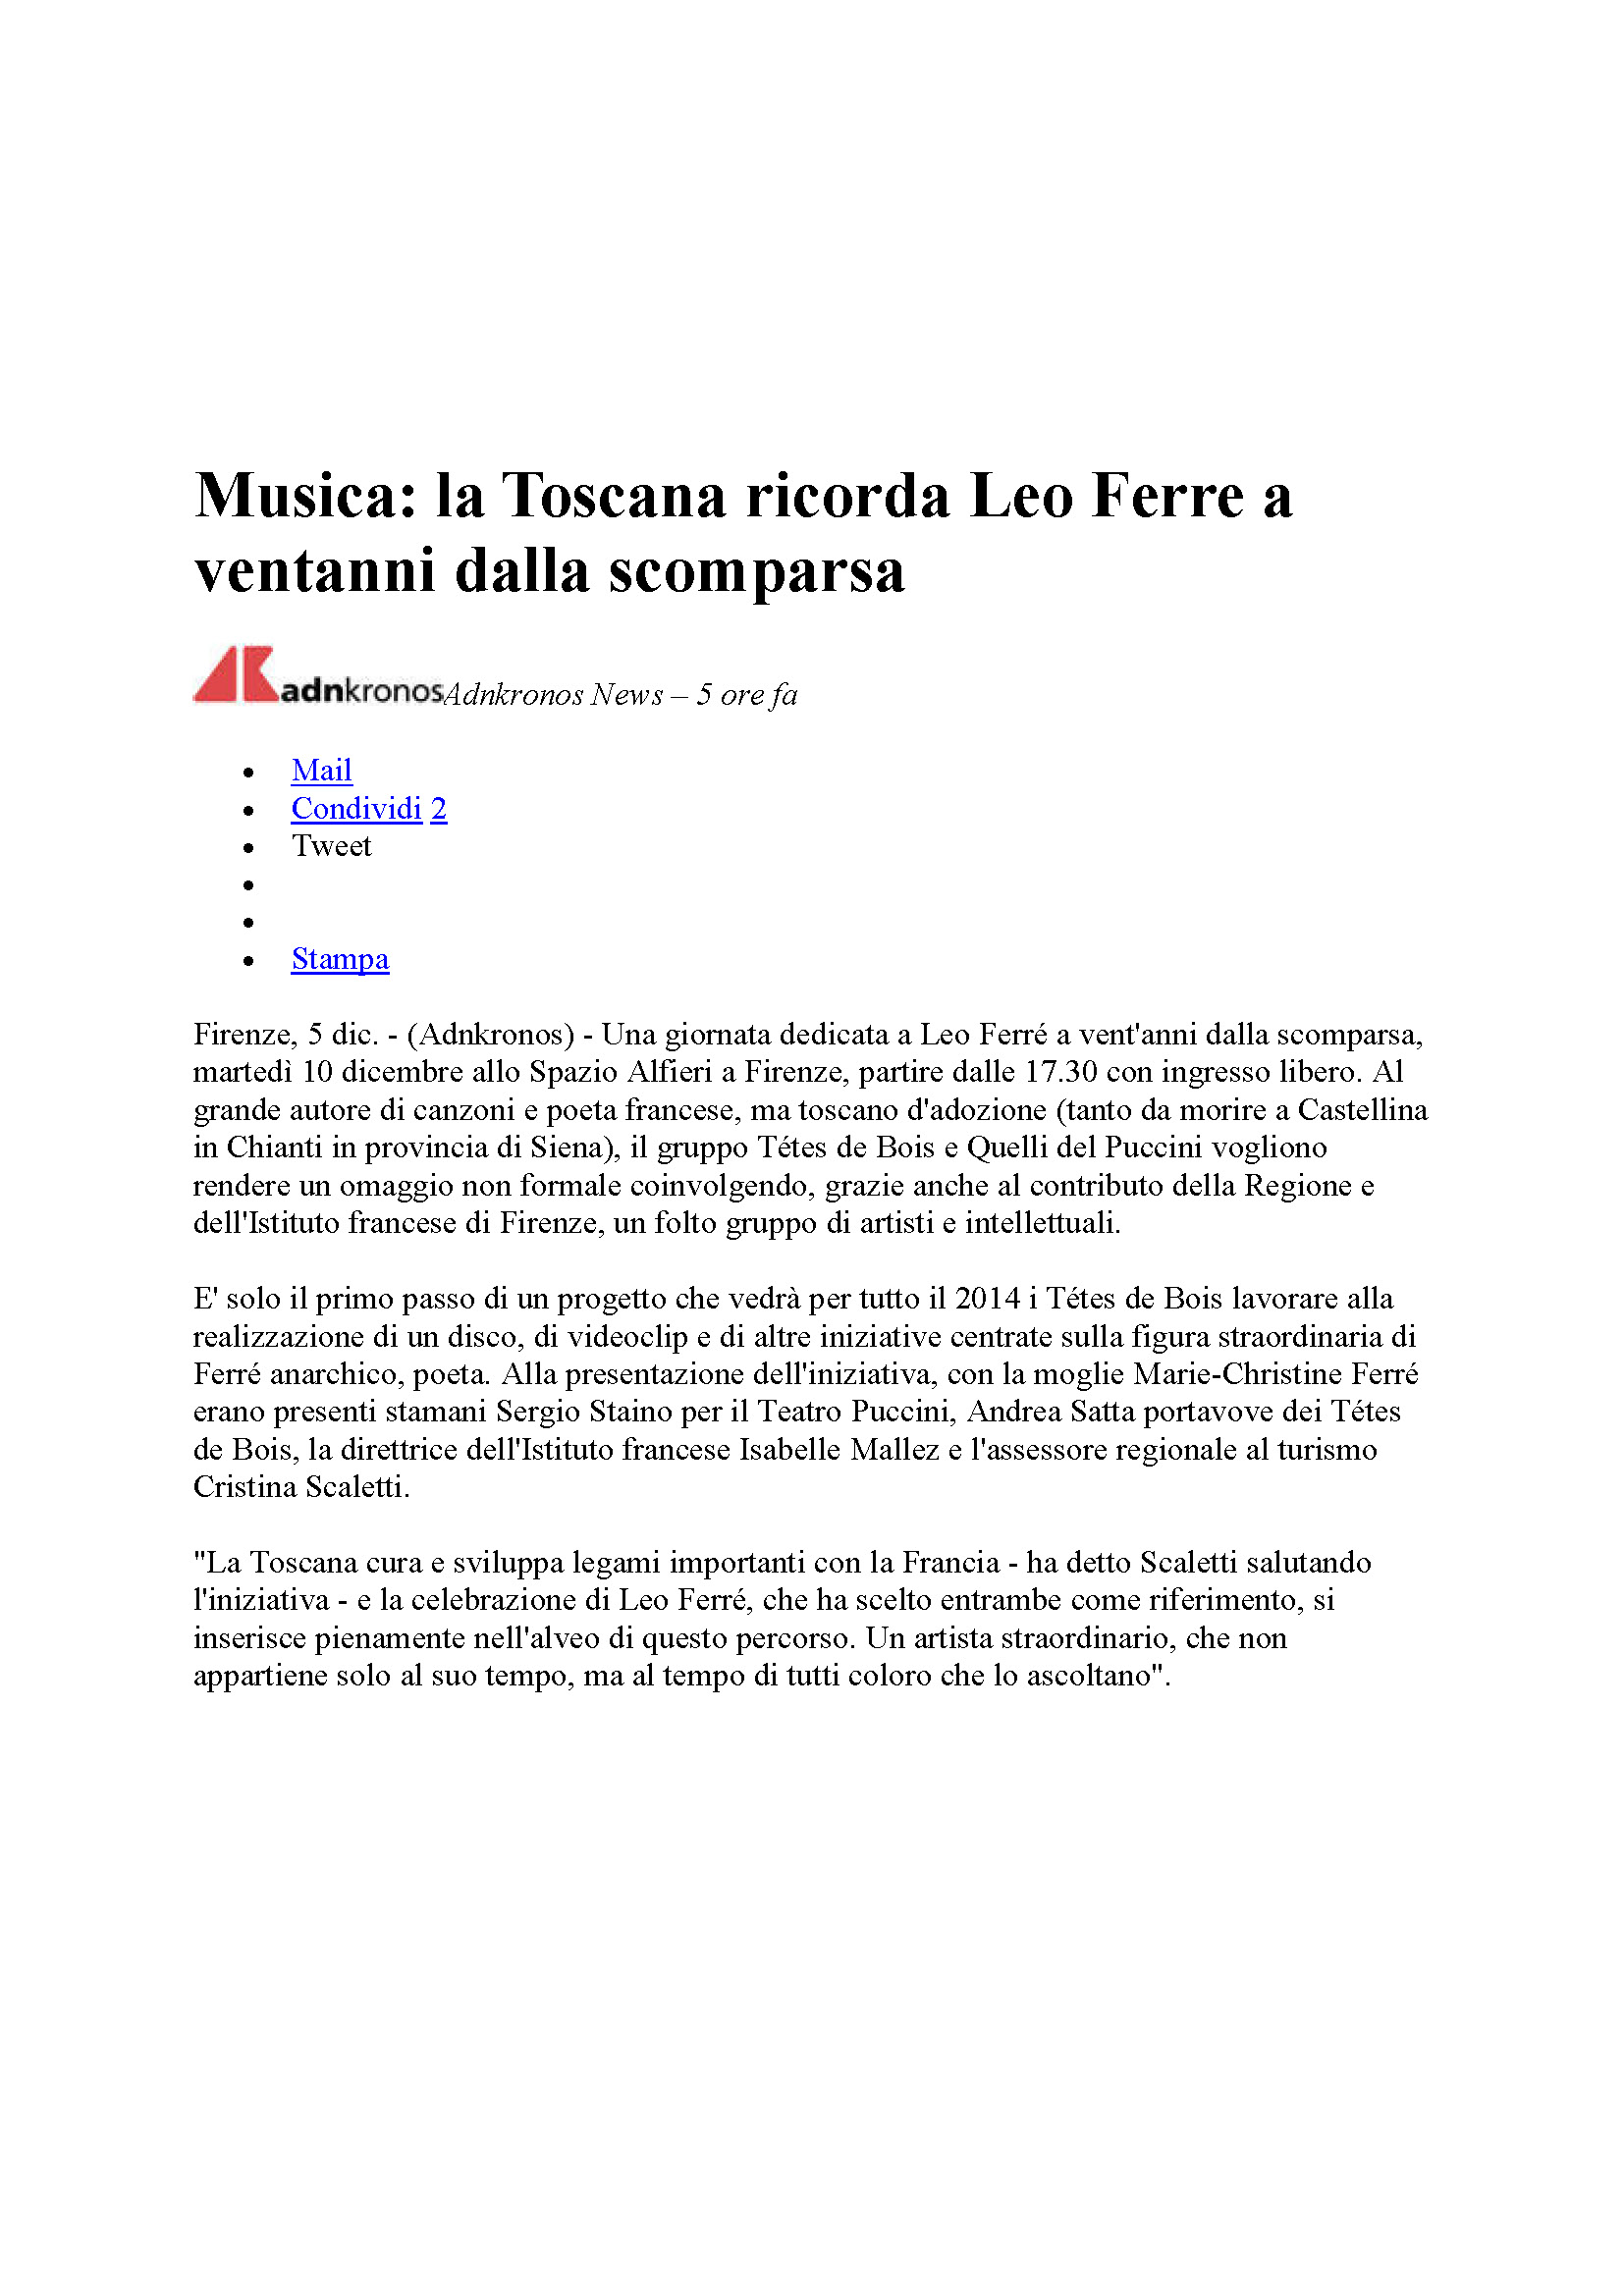  Le 05/12/2013 La Toscana ricorda Léo Ferré 